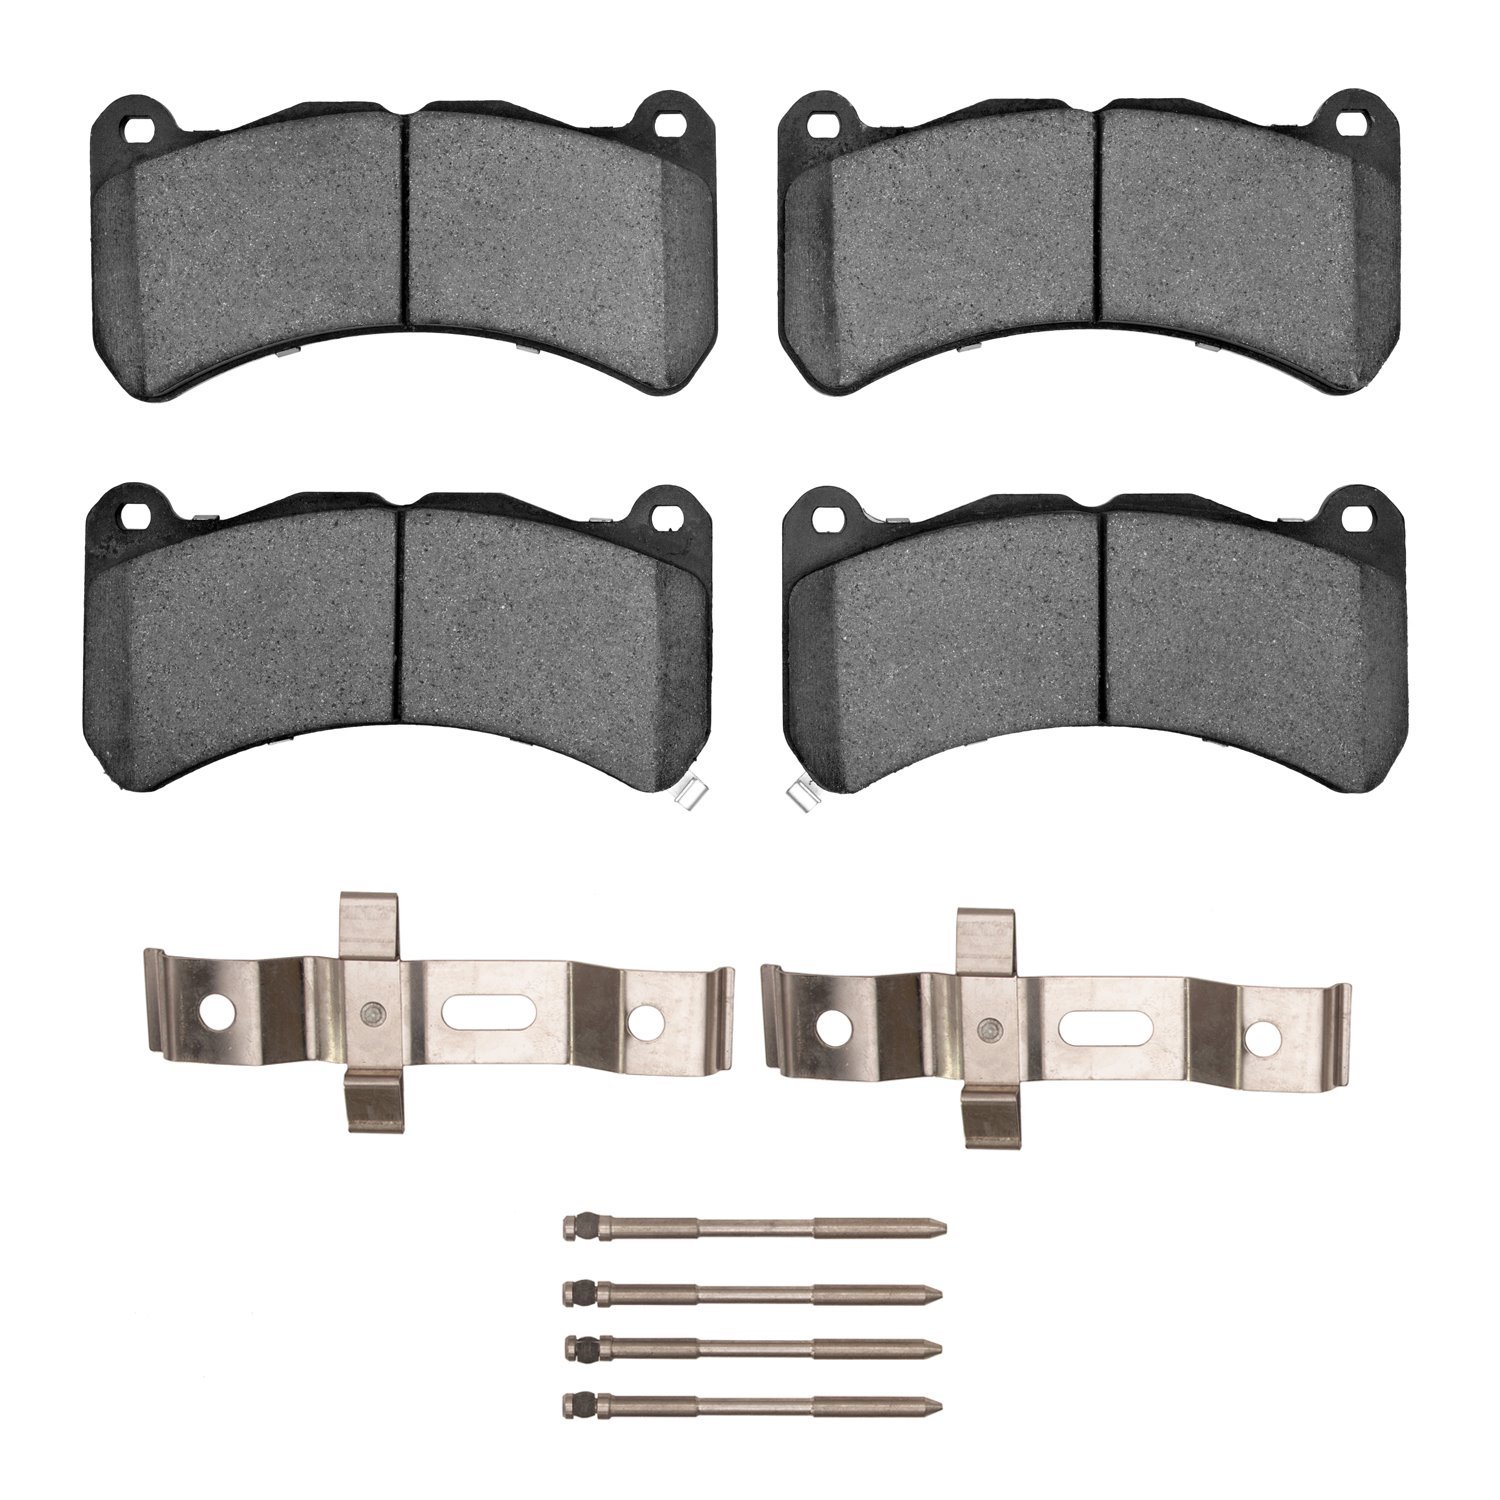 Euro Ceramic Brake Pads & Hardware Kit, 2008-2021 Fits Multiple Makes/Models, Position: Front